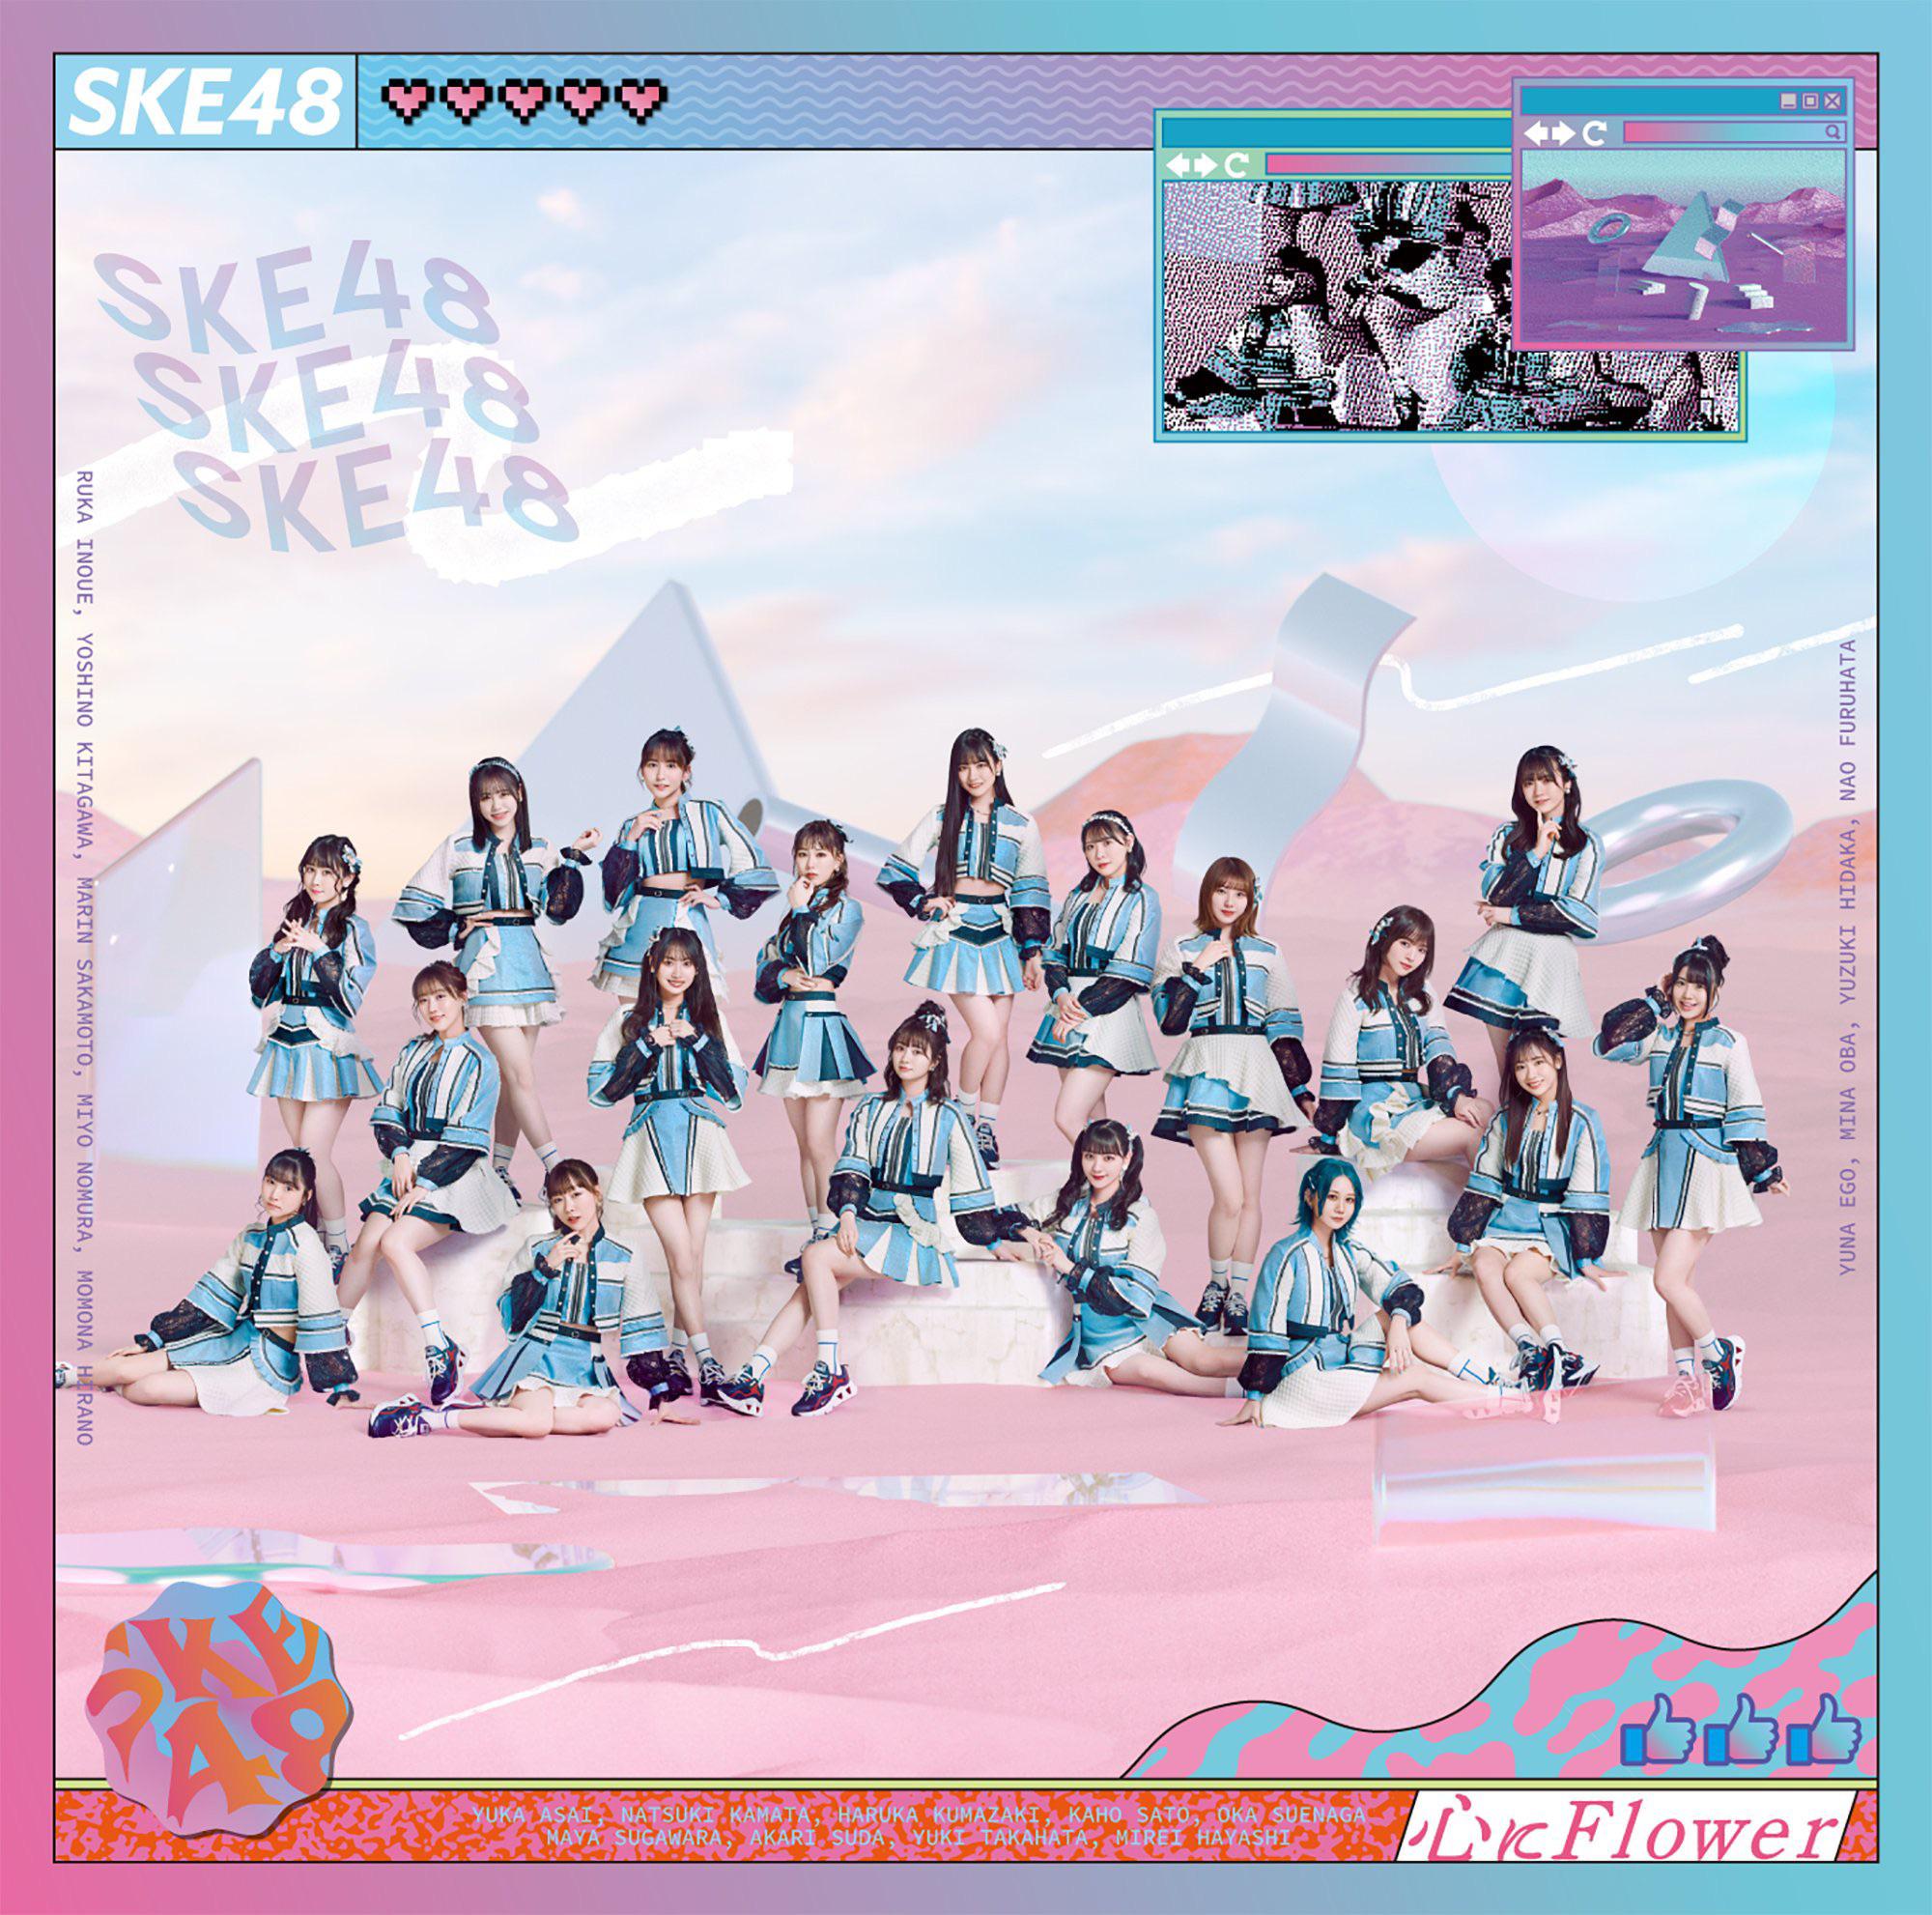 SKE48 — Kokoro ni Flower cover artwork